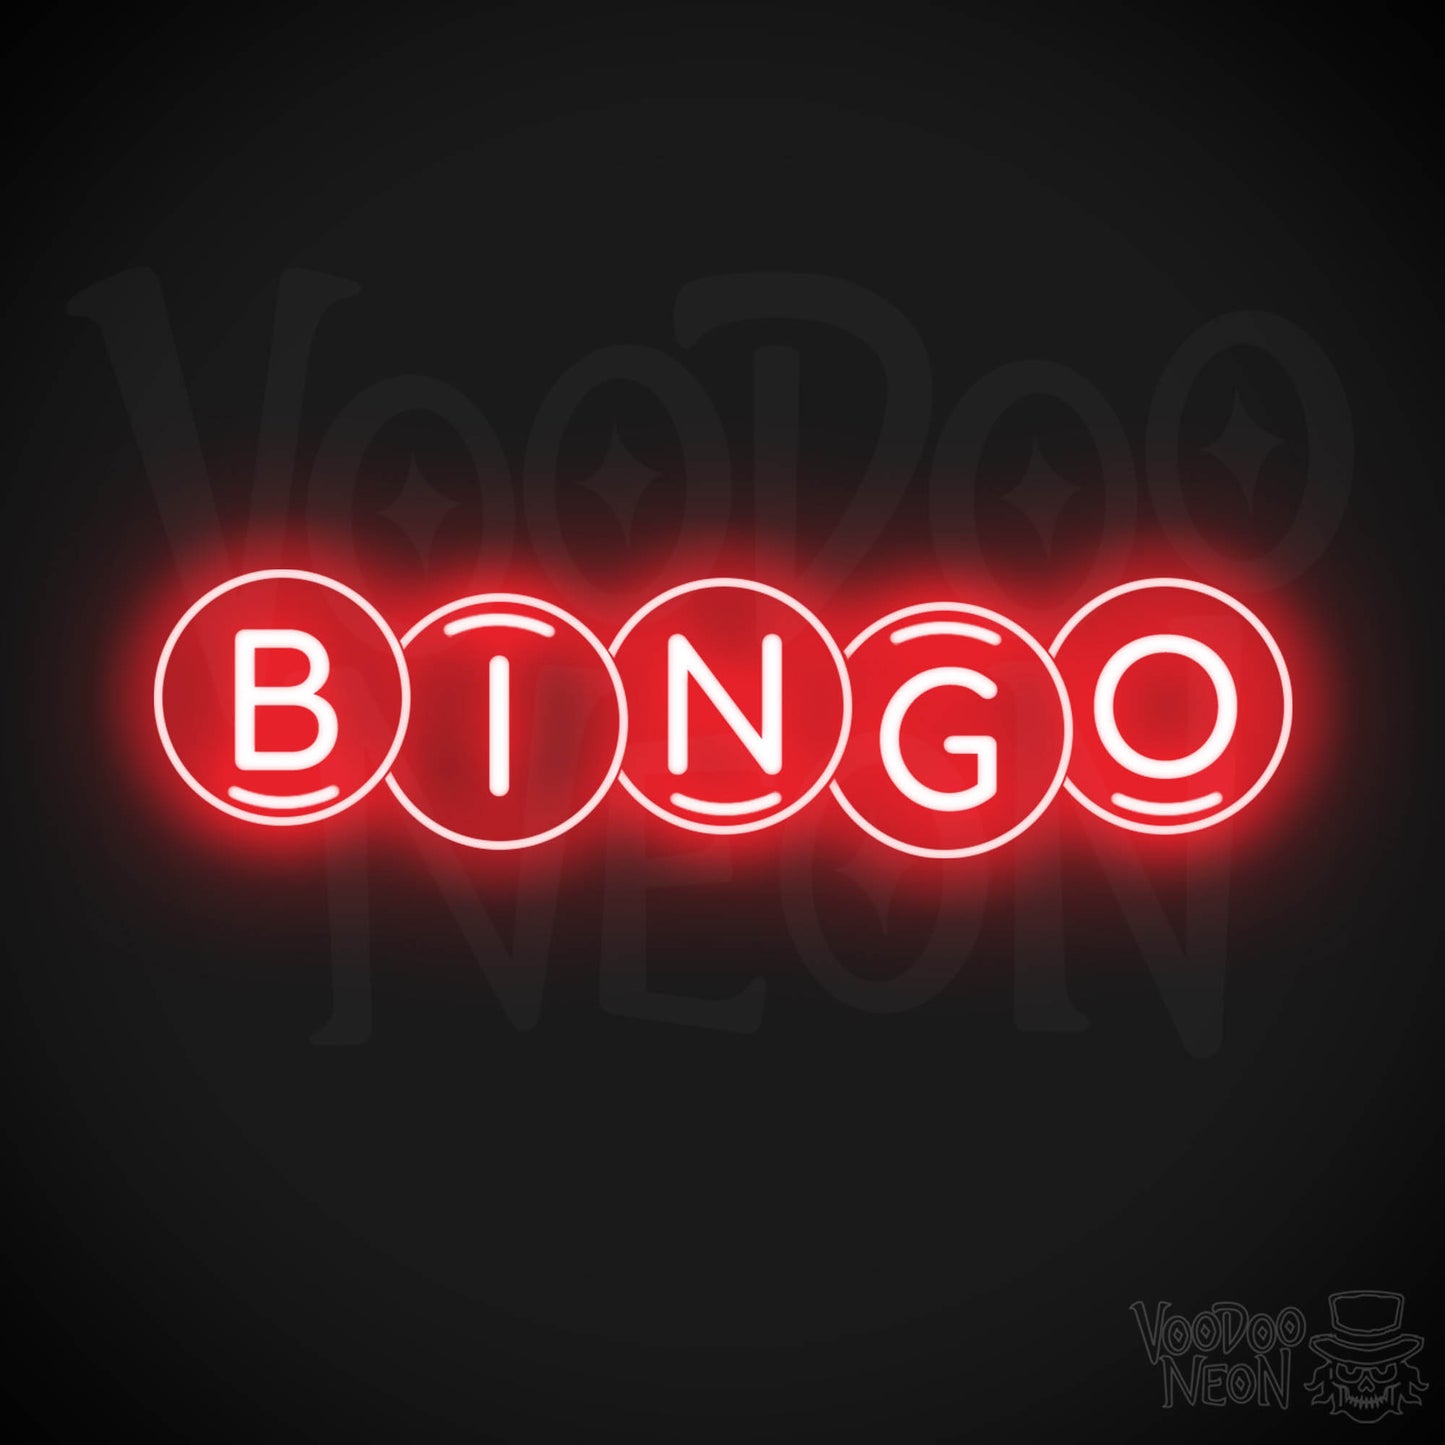 Bingo Neon Sign - Bingo Sign - Wall Art - Color Red